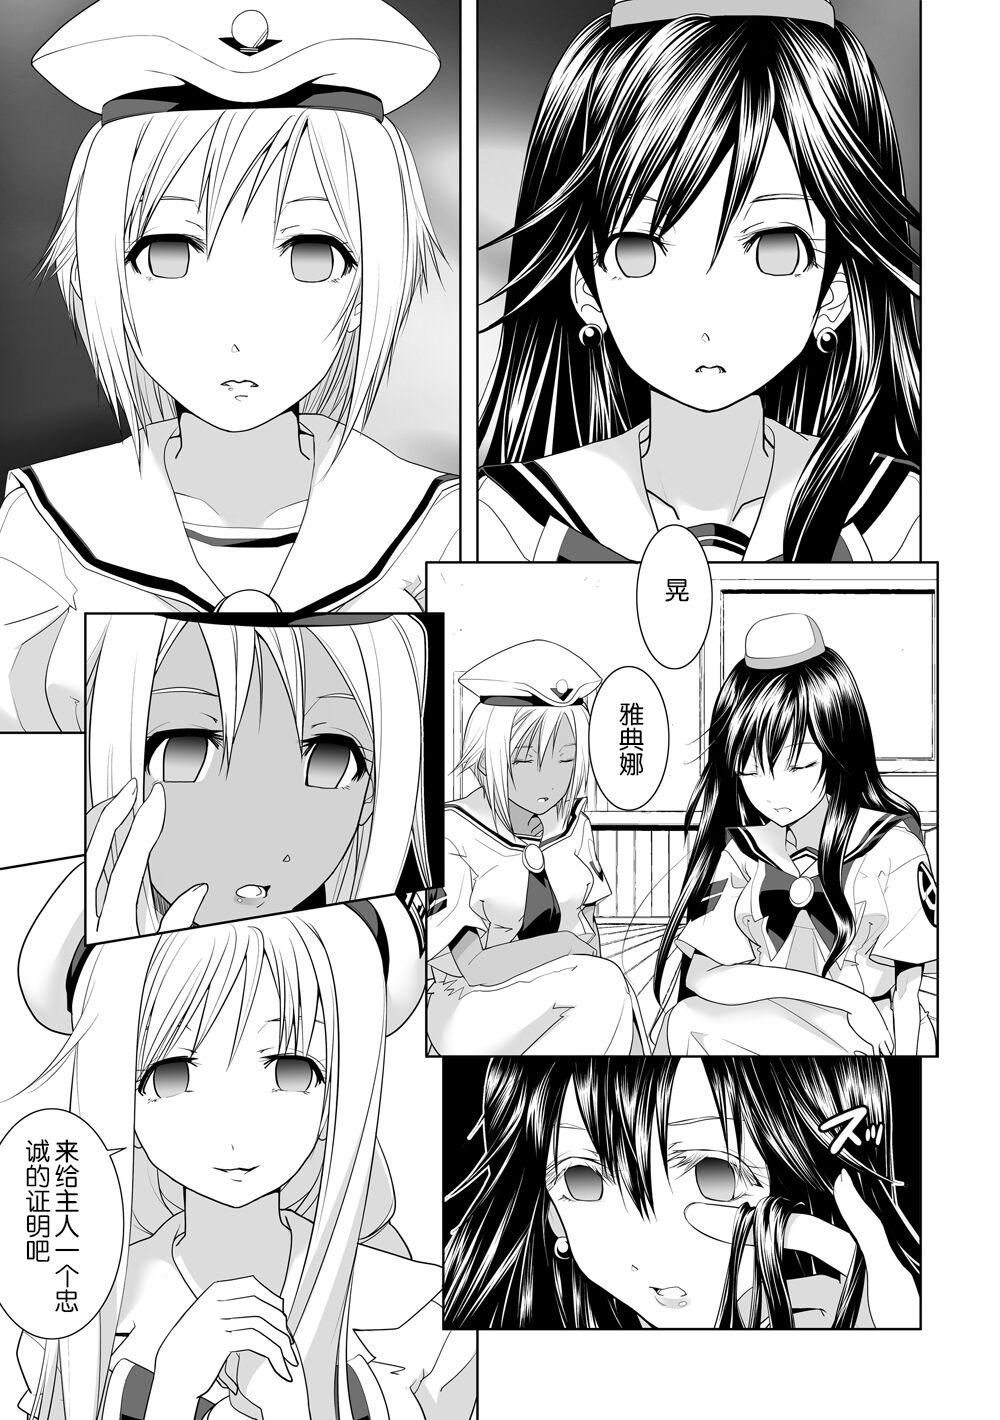 Weird AR*A Mind-control Manga - Aria Amigos - Page 9